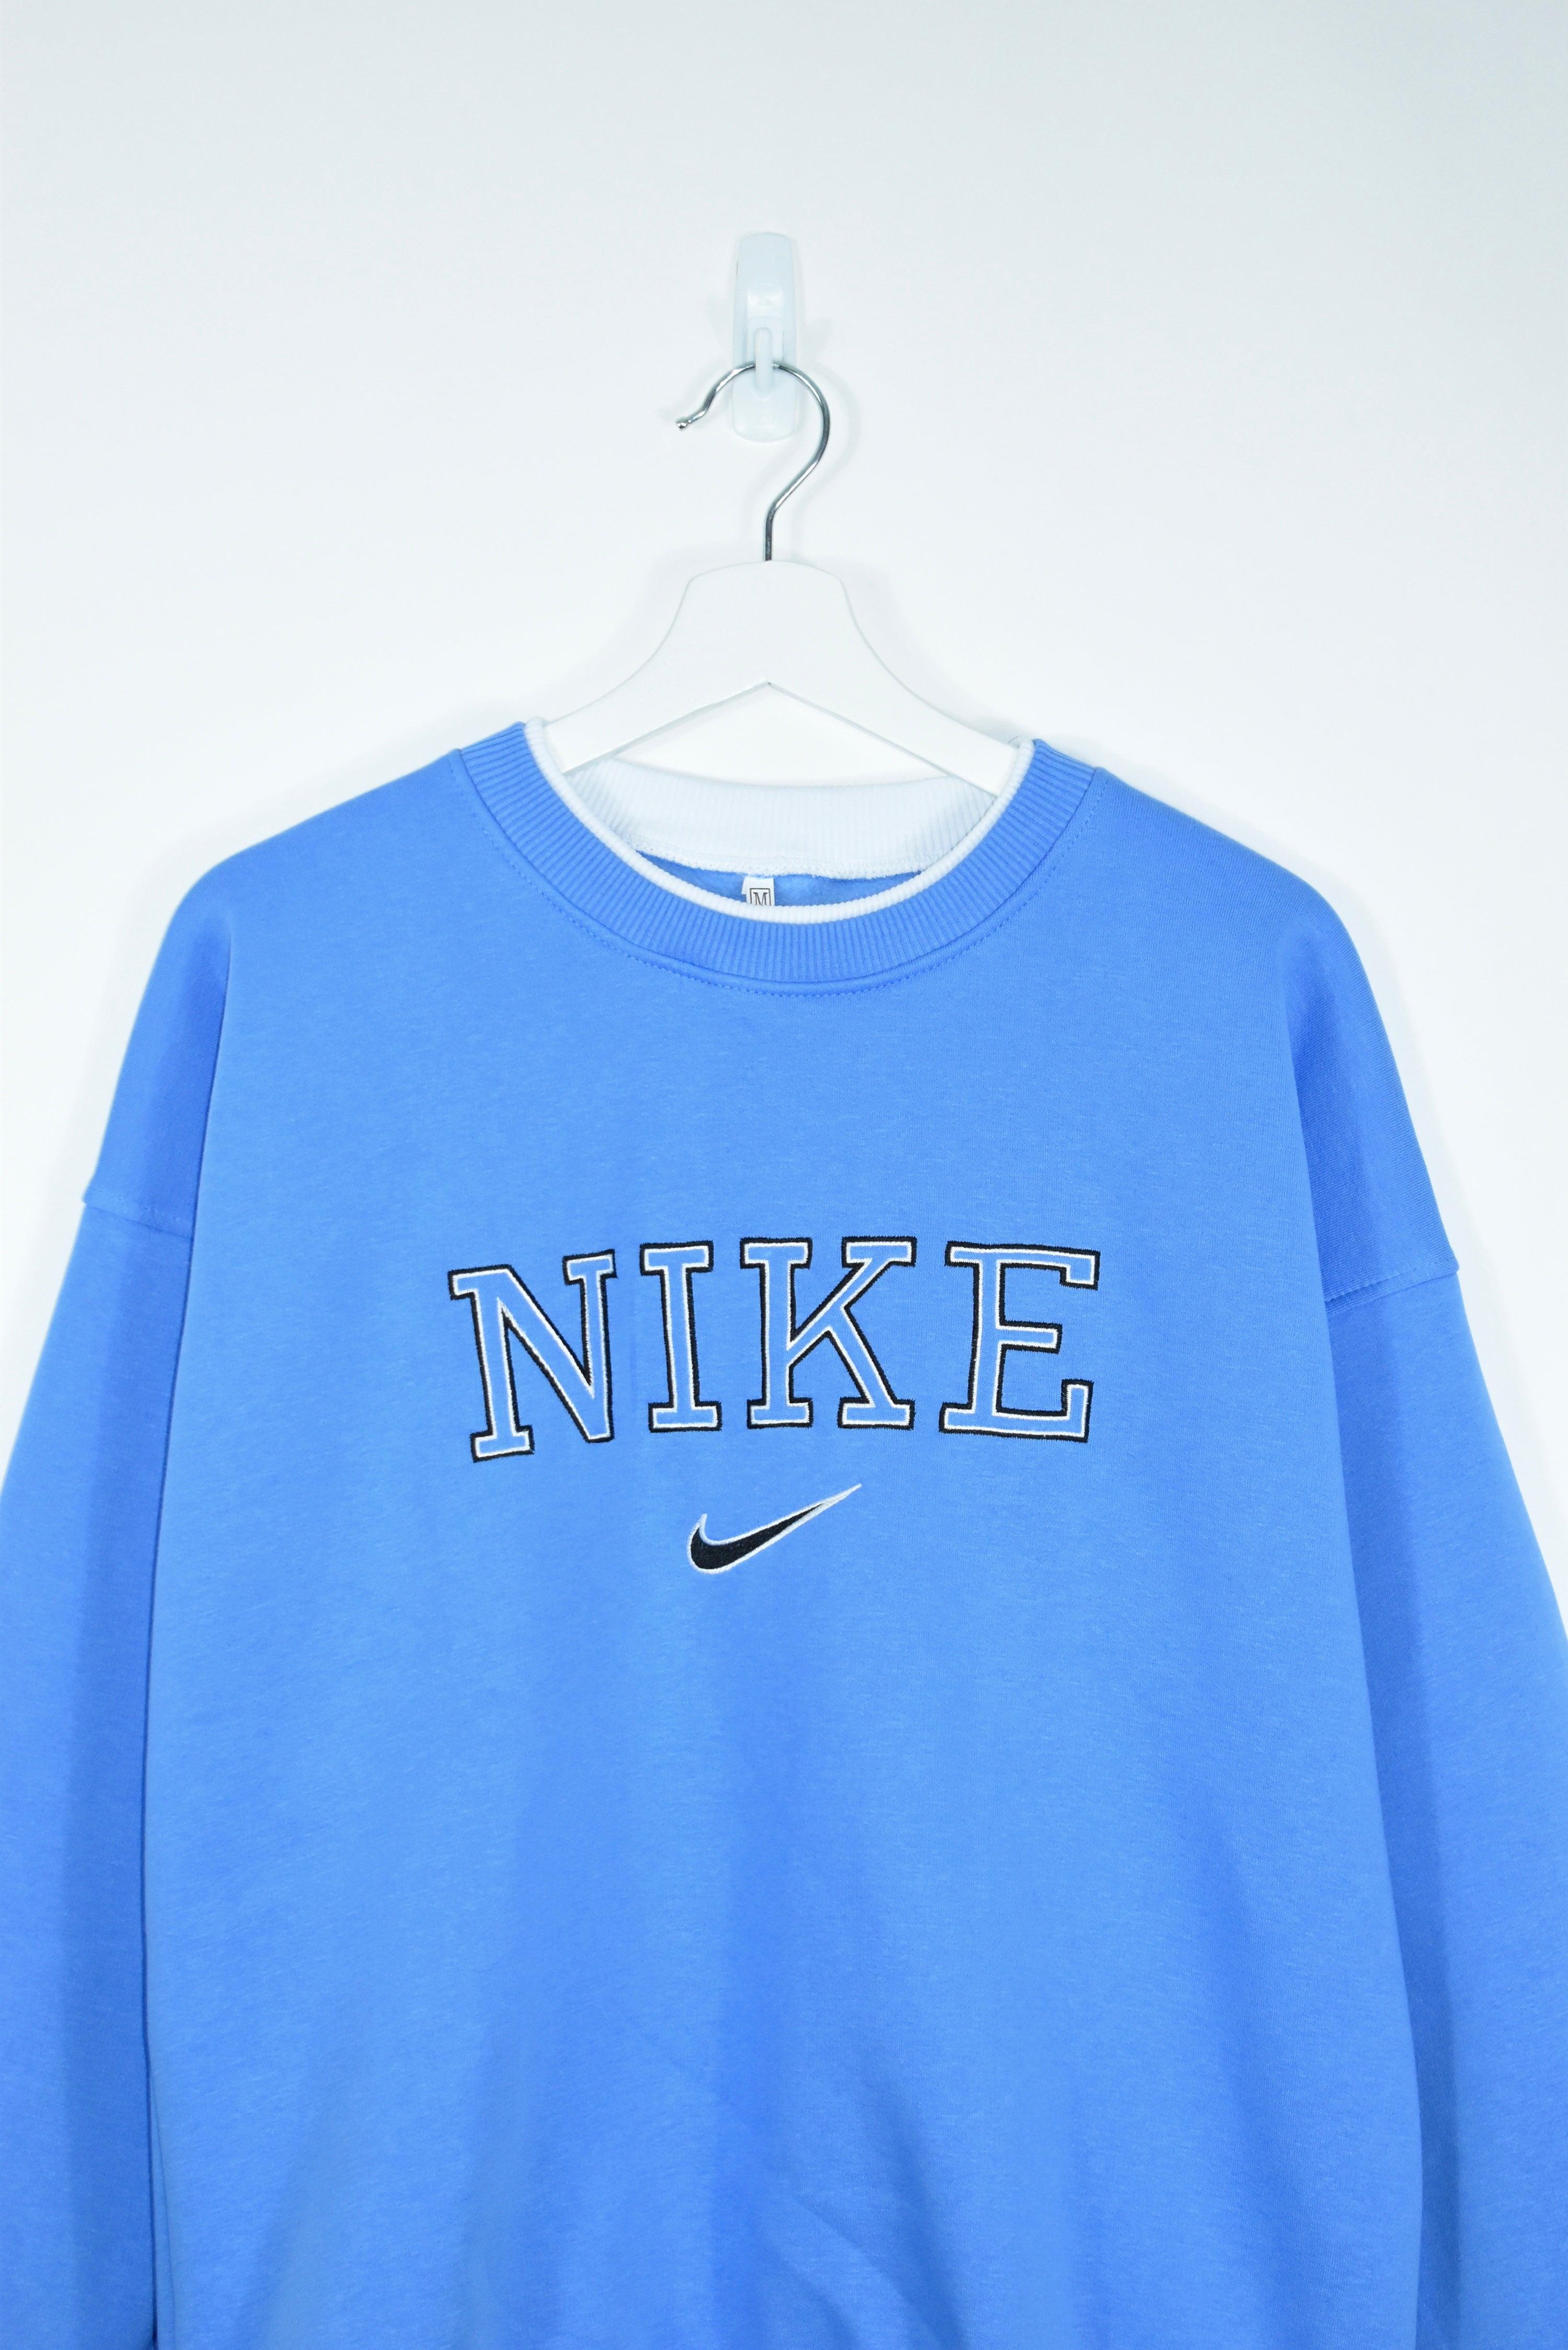 Vintage Nike Baby Blue Bootleg Embroidery Sweatshirt